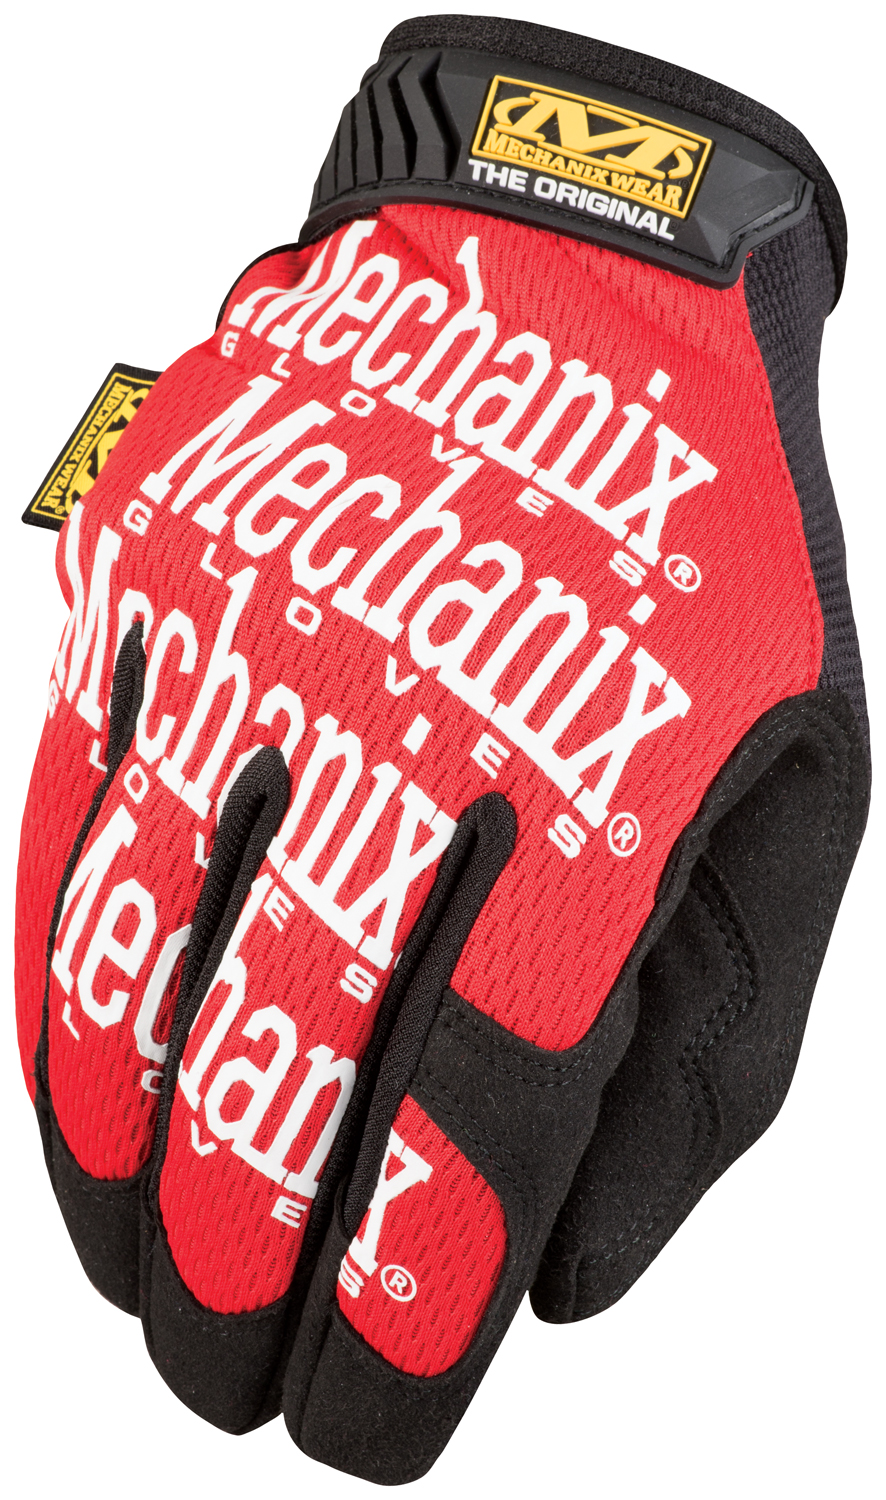 Mechanix Wear Handschuh Original, rot/schwarz